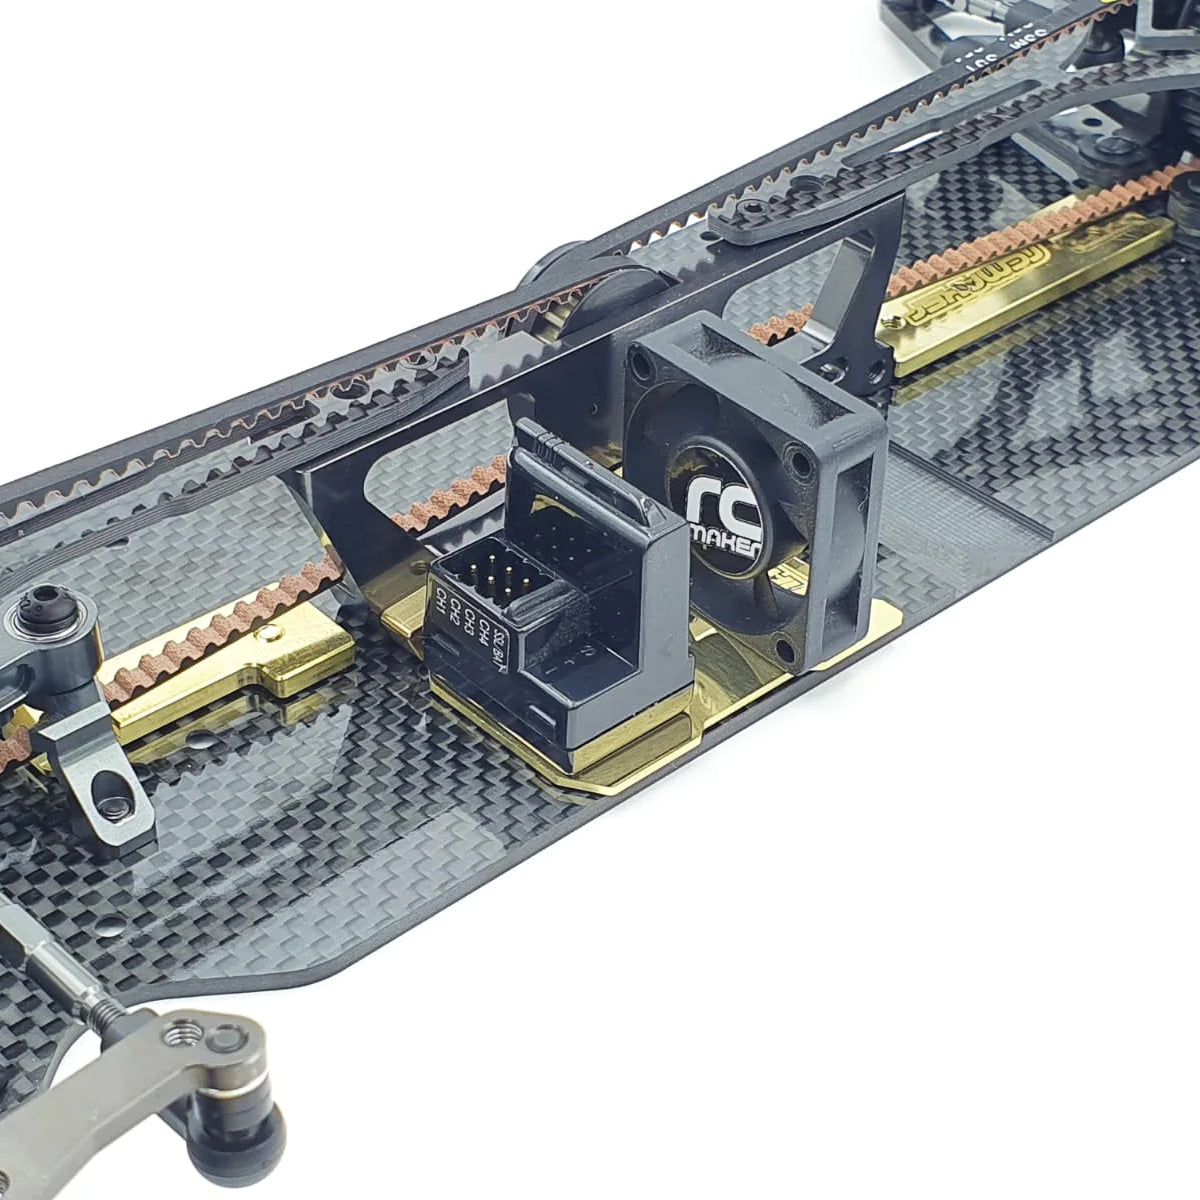 RC MAKER Adjustable Floating Electronics Plate Sets - A800R/MMX